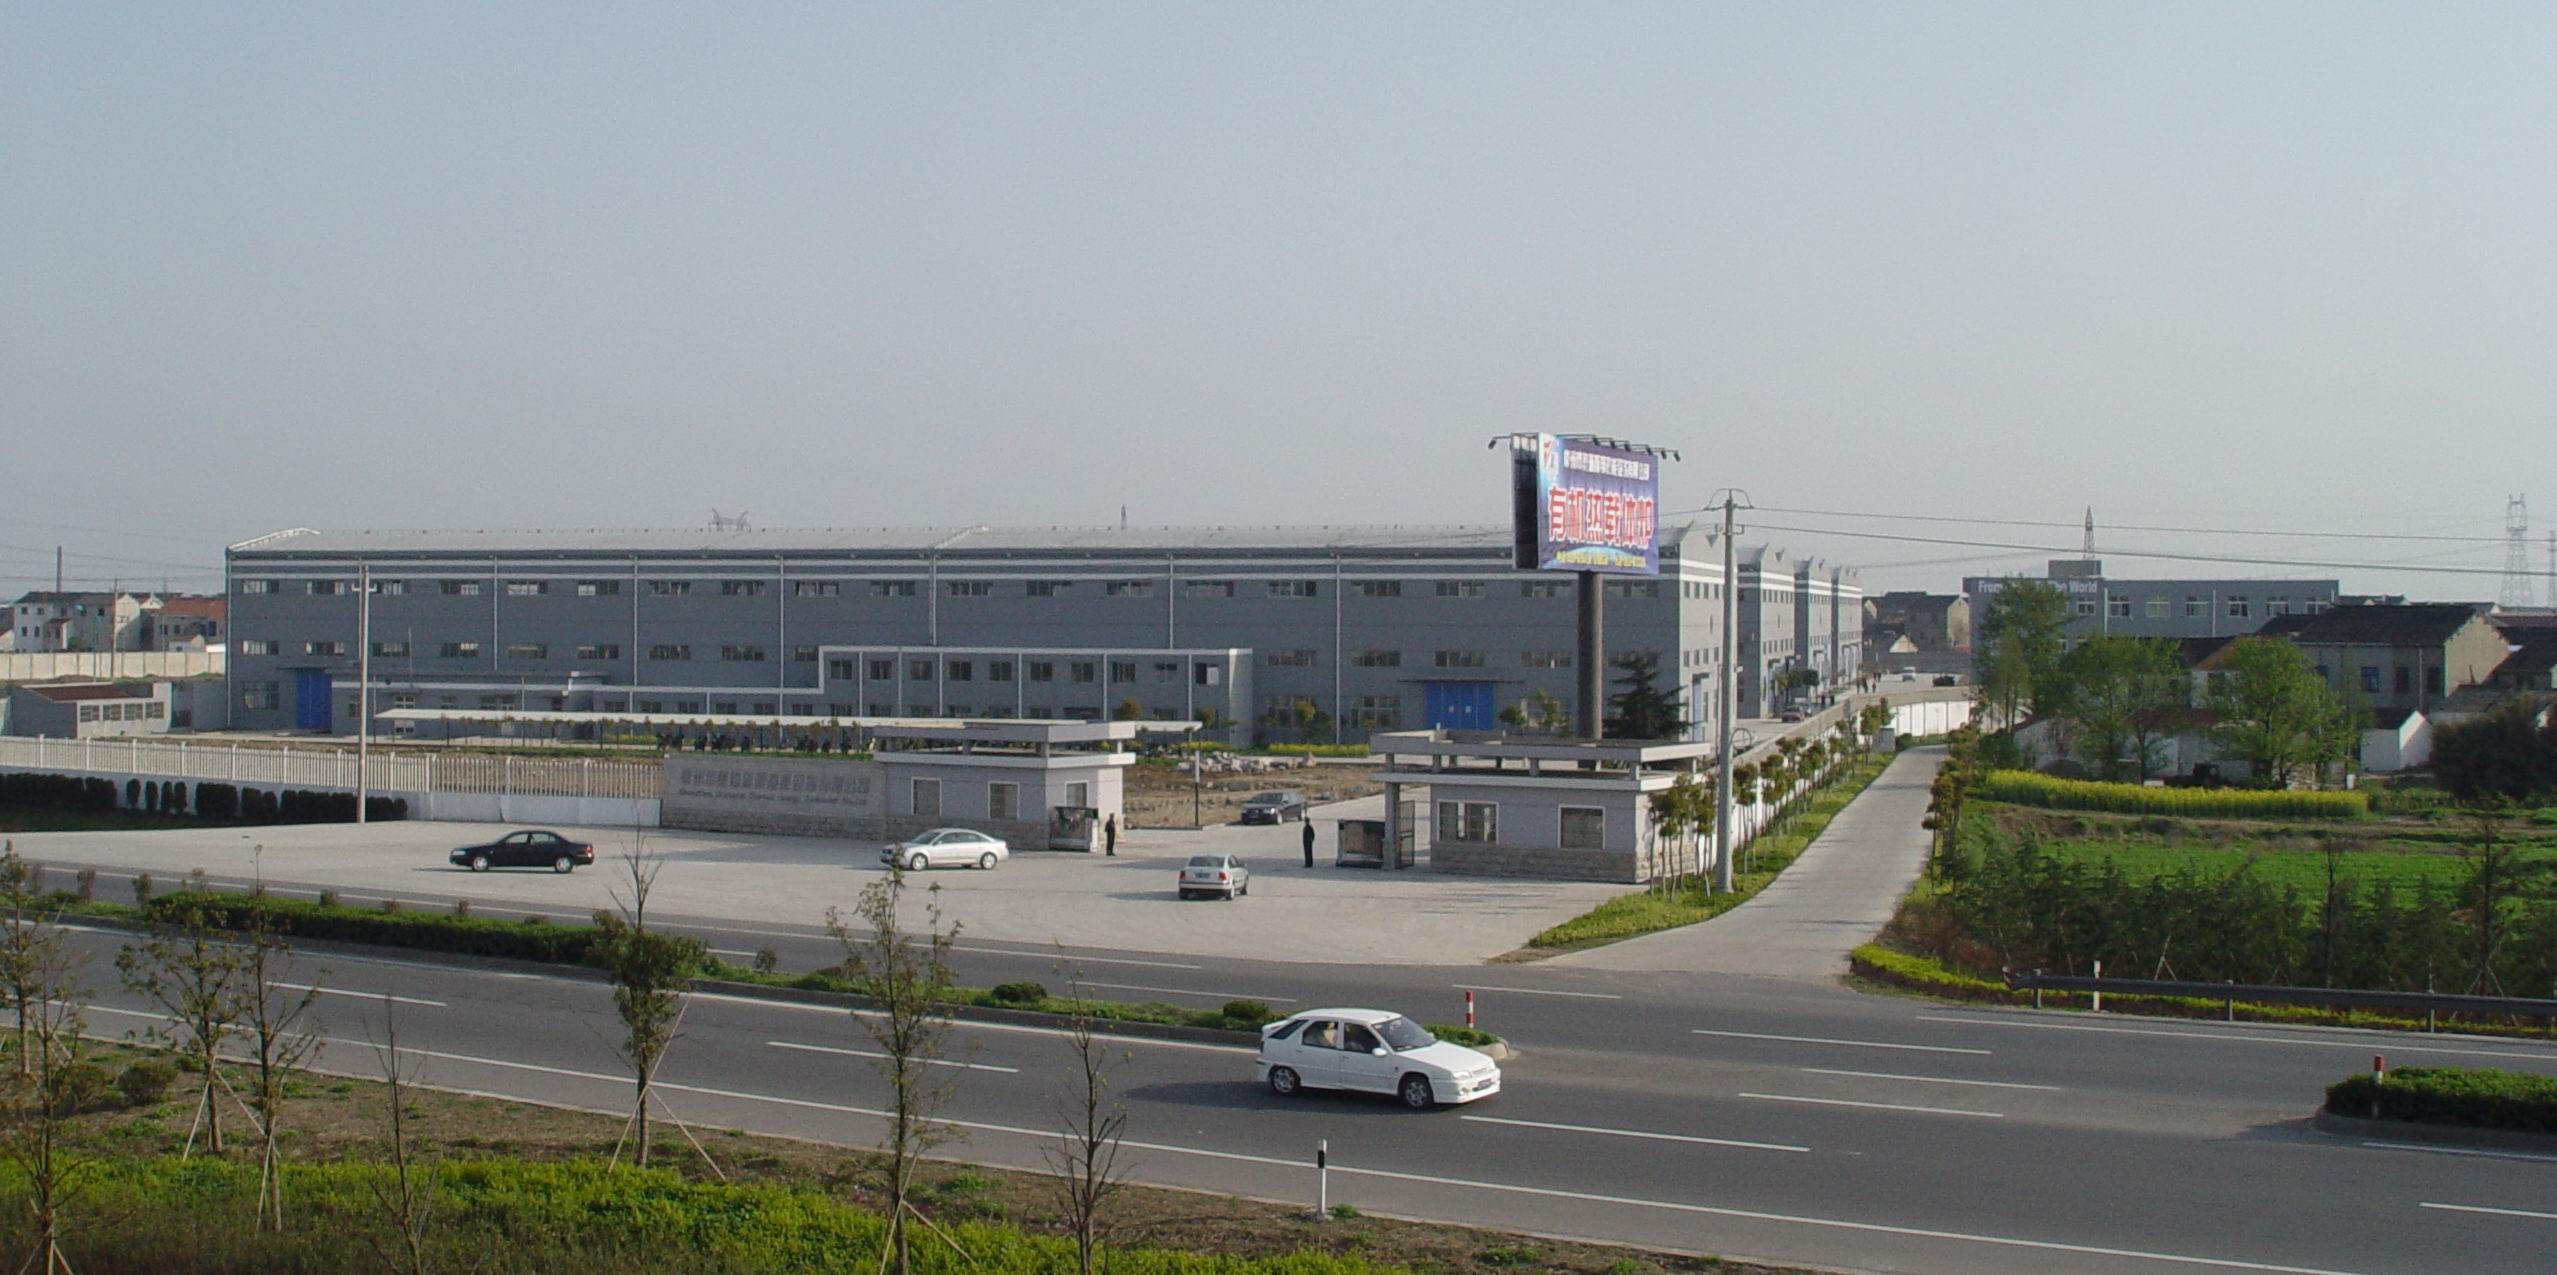 Jiangsu olymspan thermal energy equipment co.,ltd